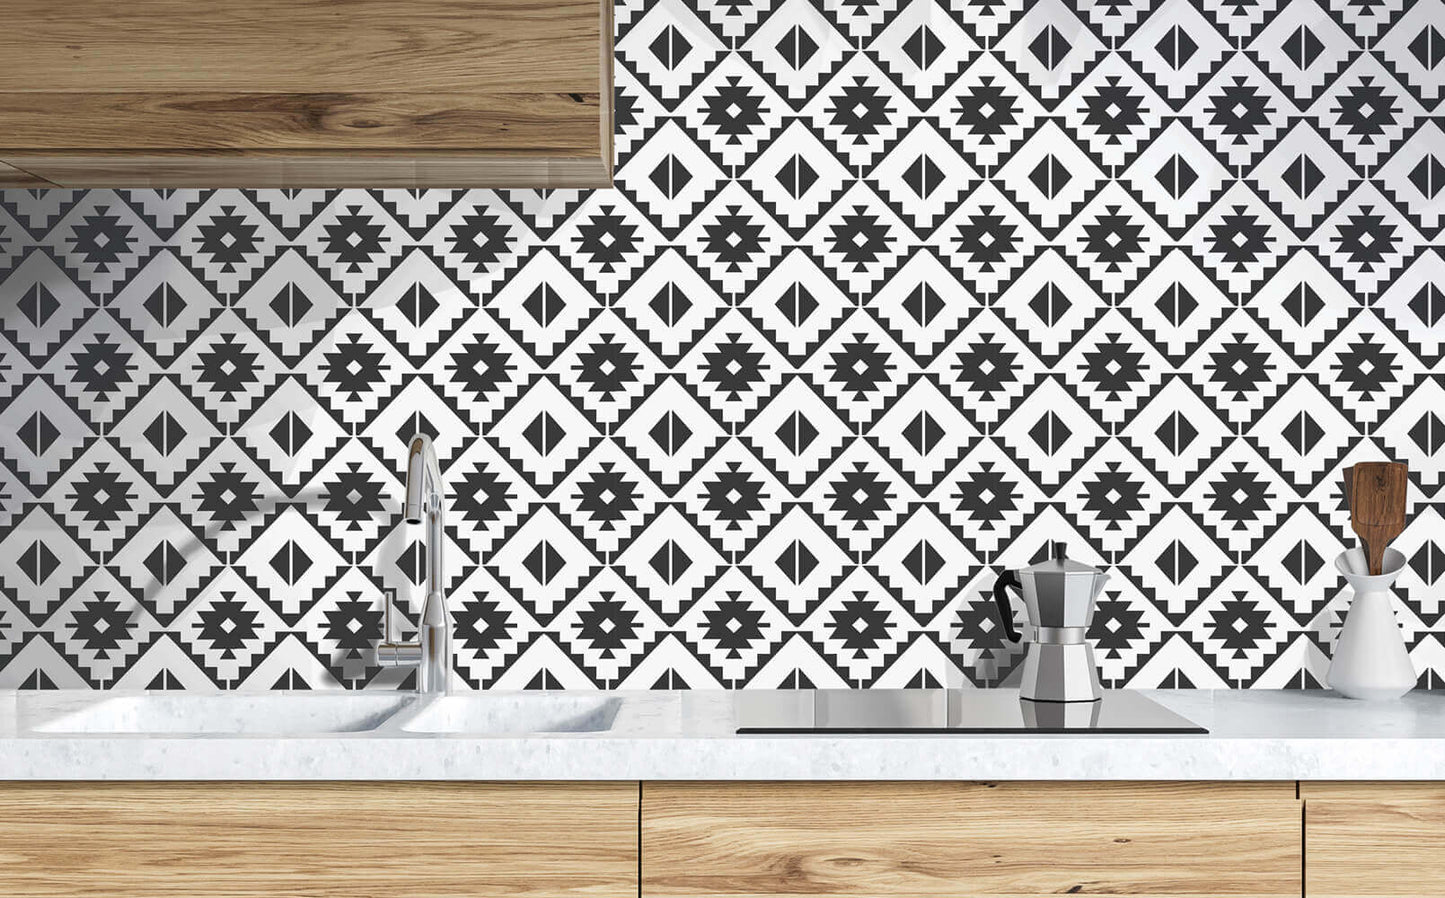 NextWall Southwest Tile Peel & Stick Wallpaper - Black & White